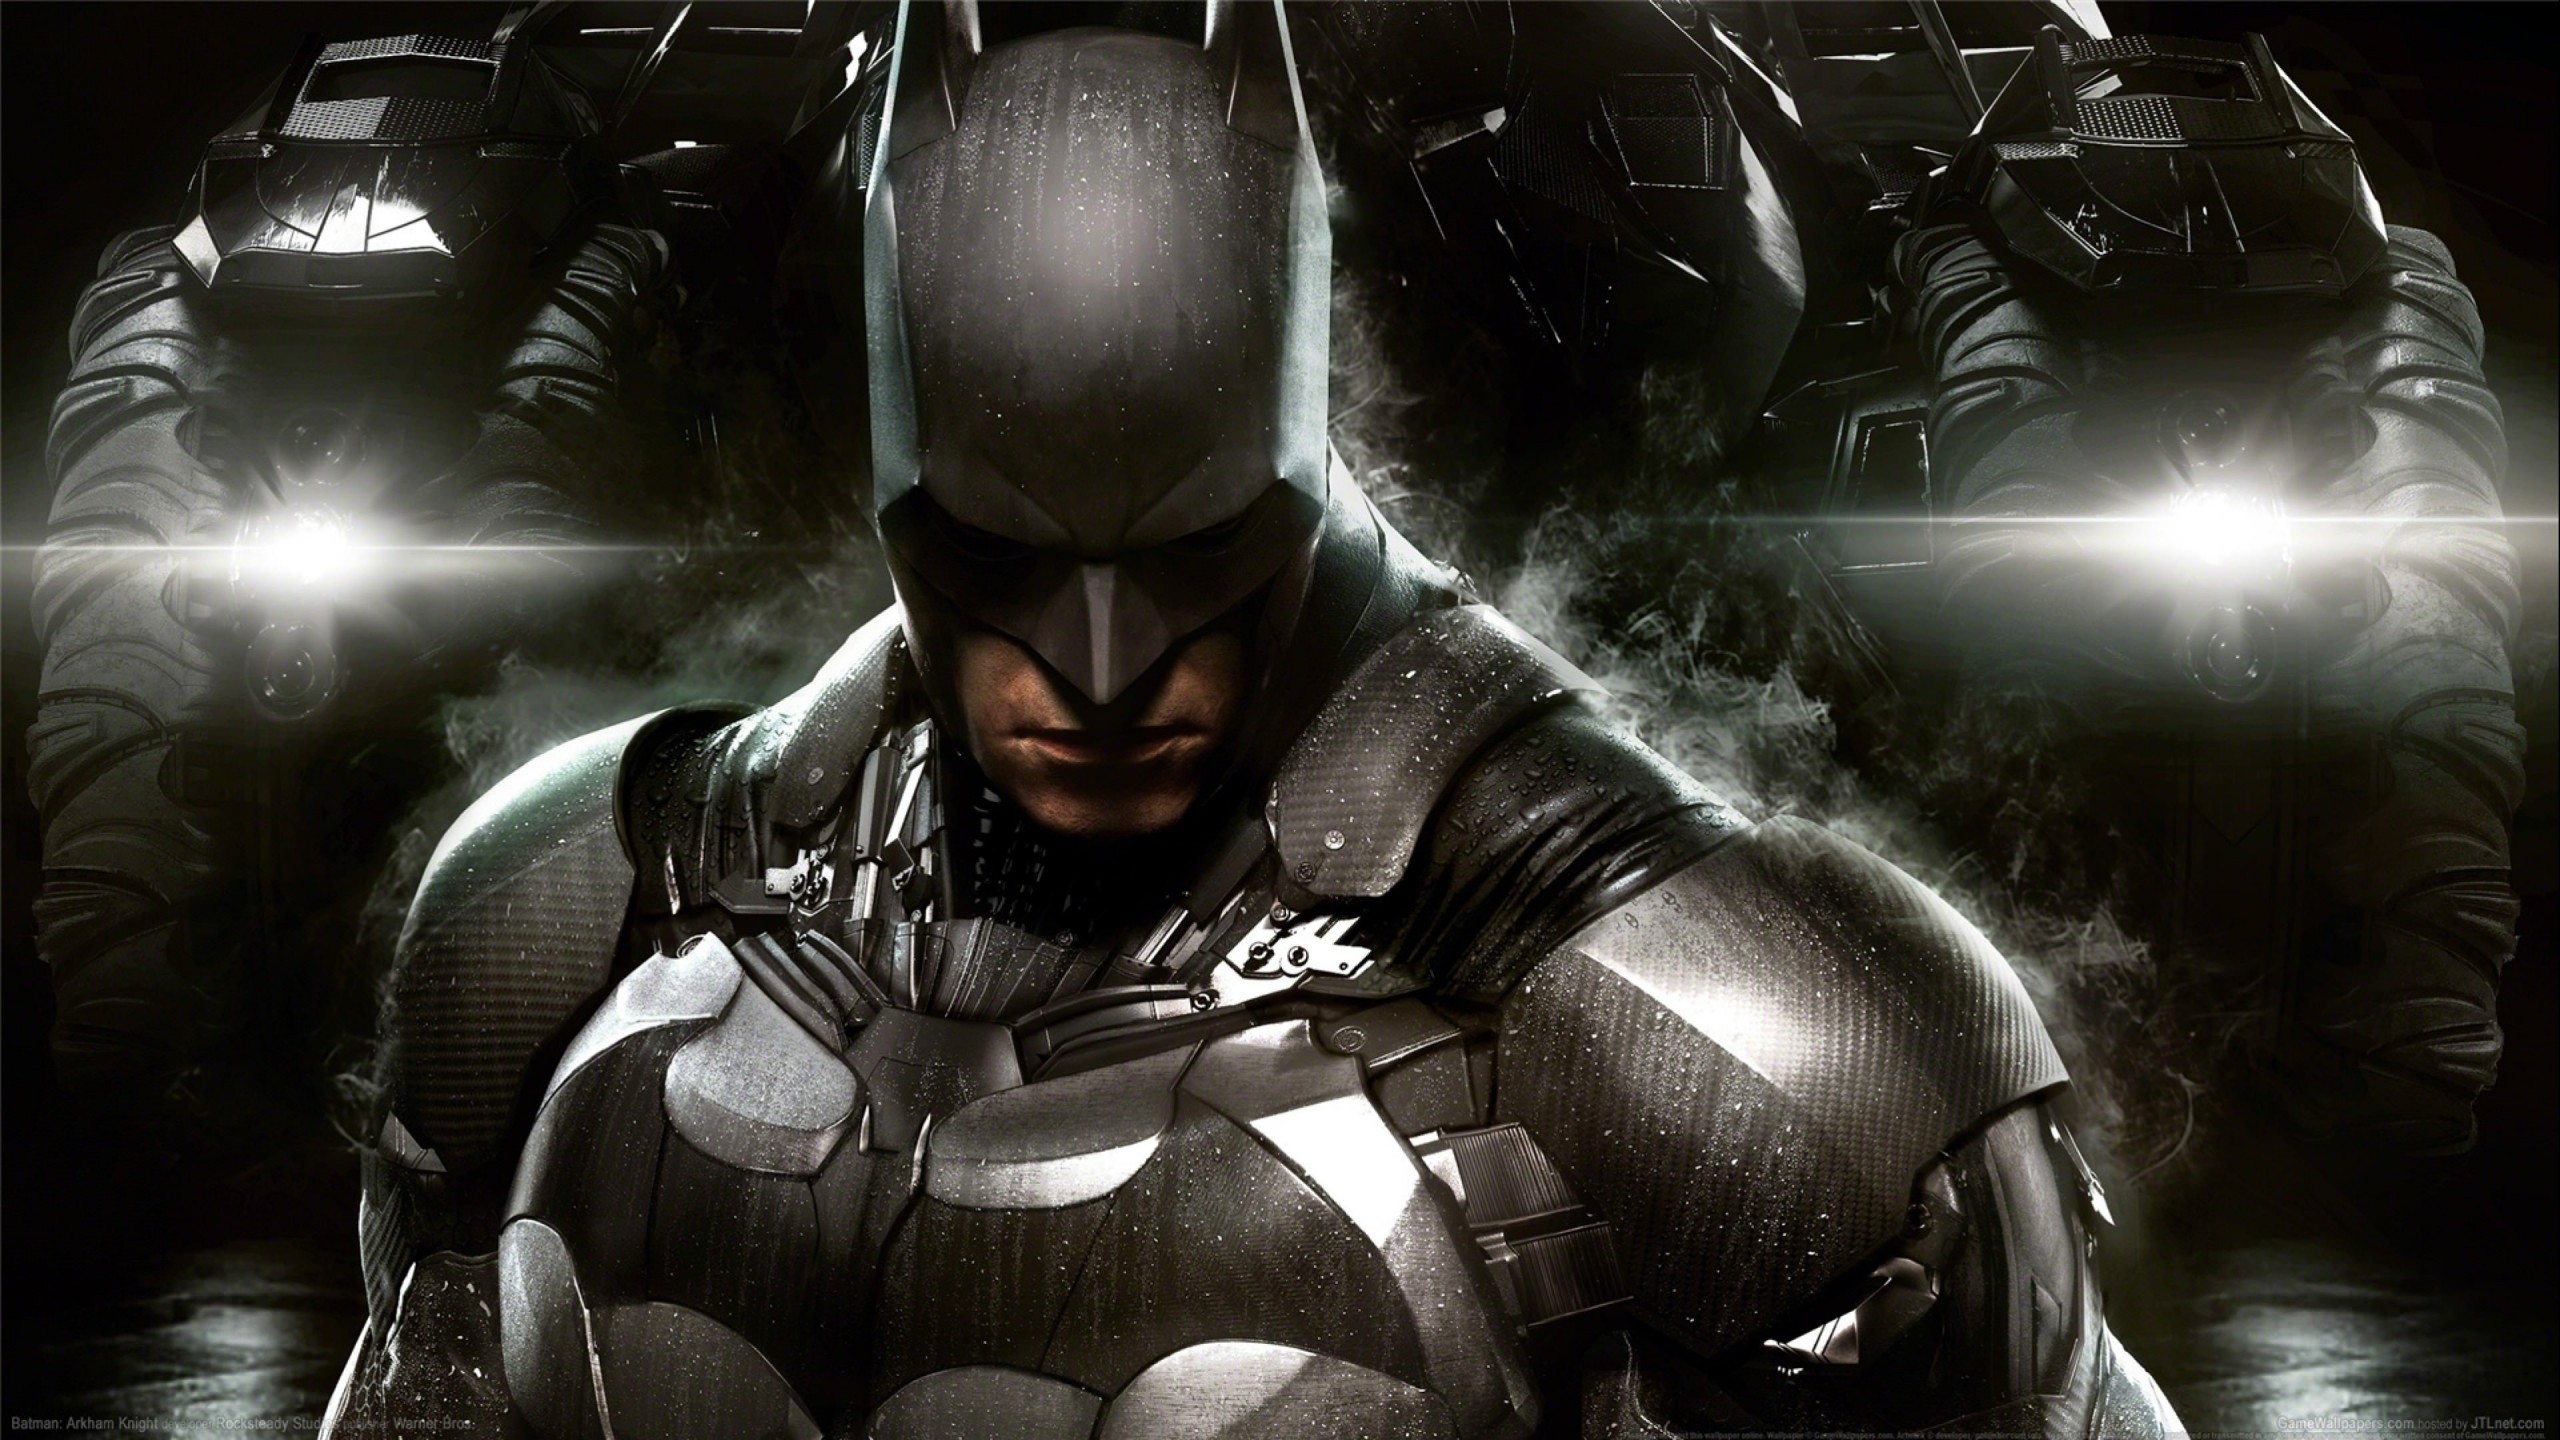 The Batman : Arkham Knight Wallpaper for Social Media YouTube Channel Art